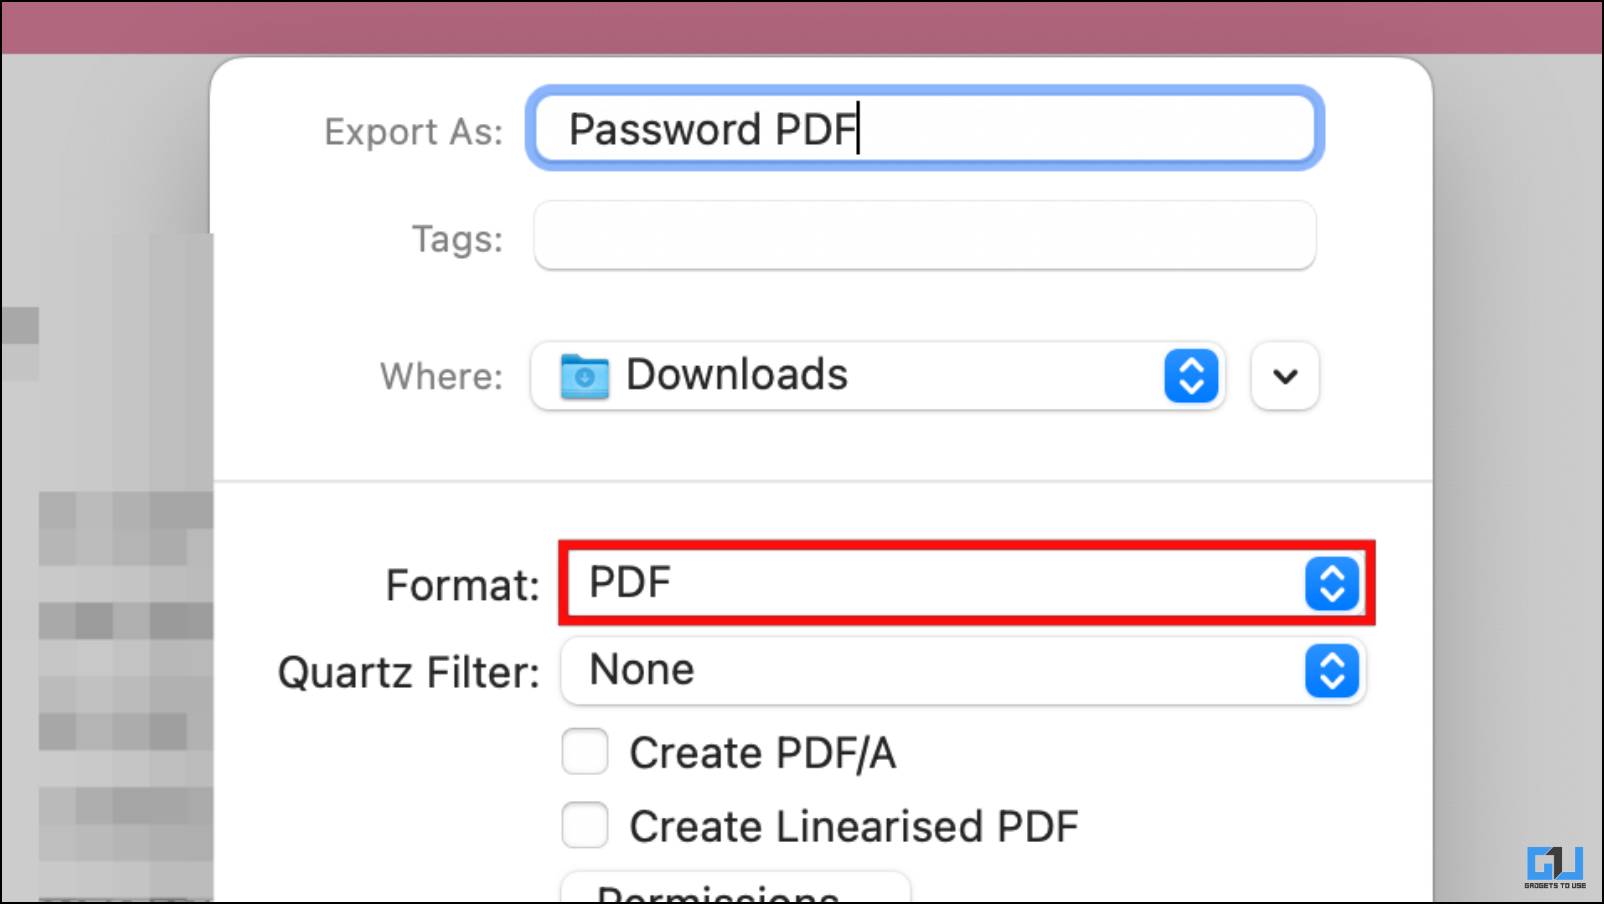 Select File Format as PDF